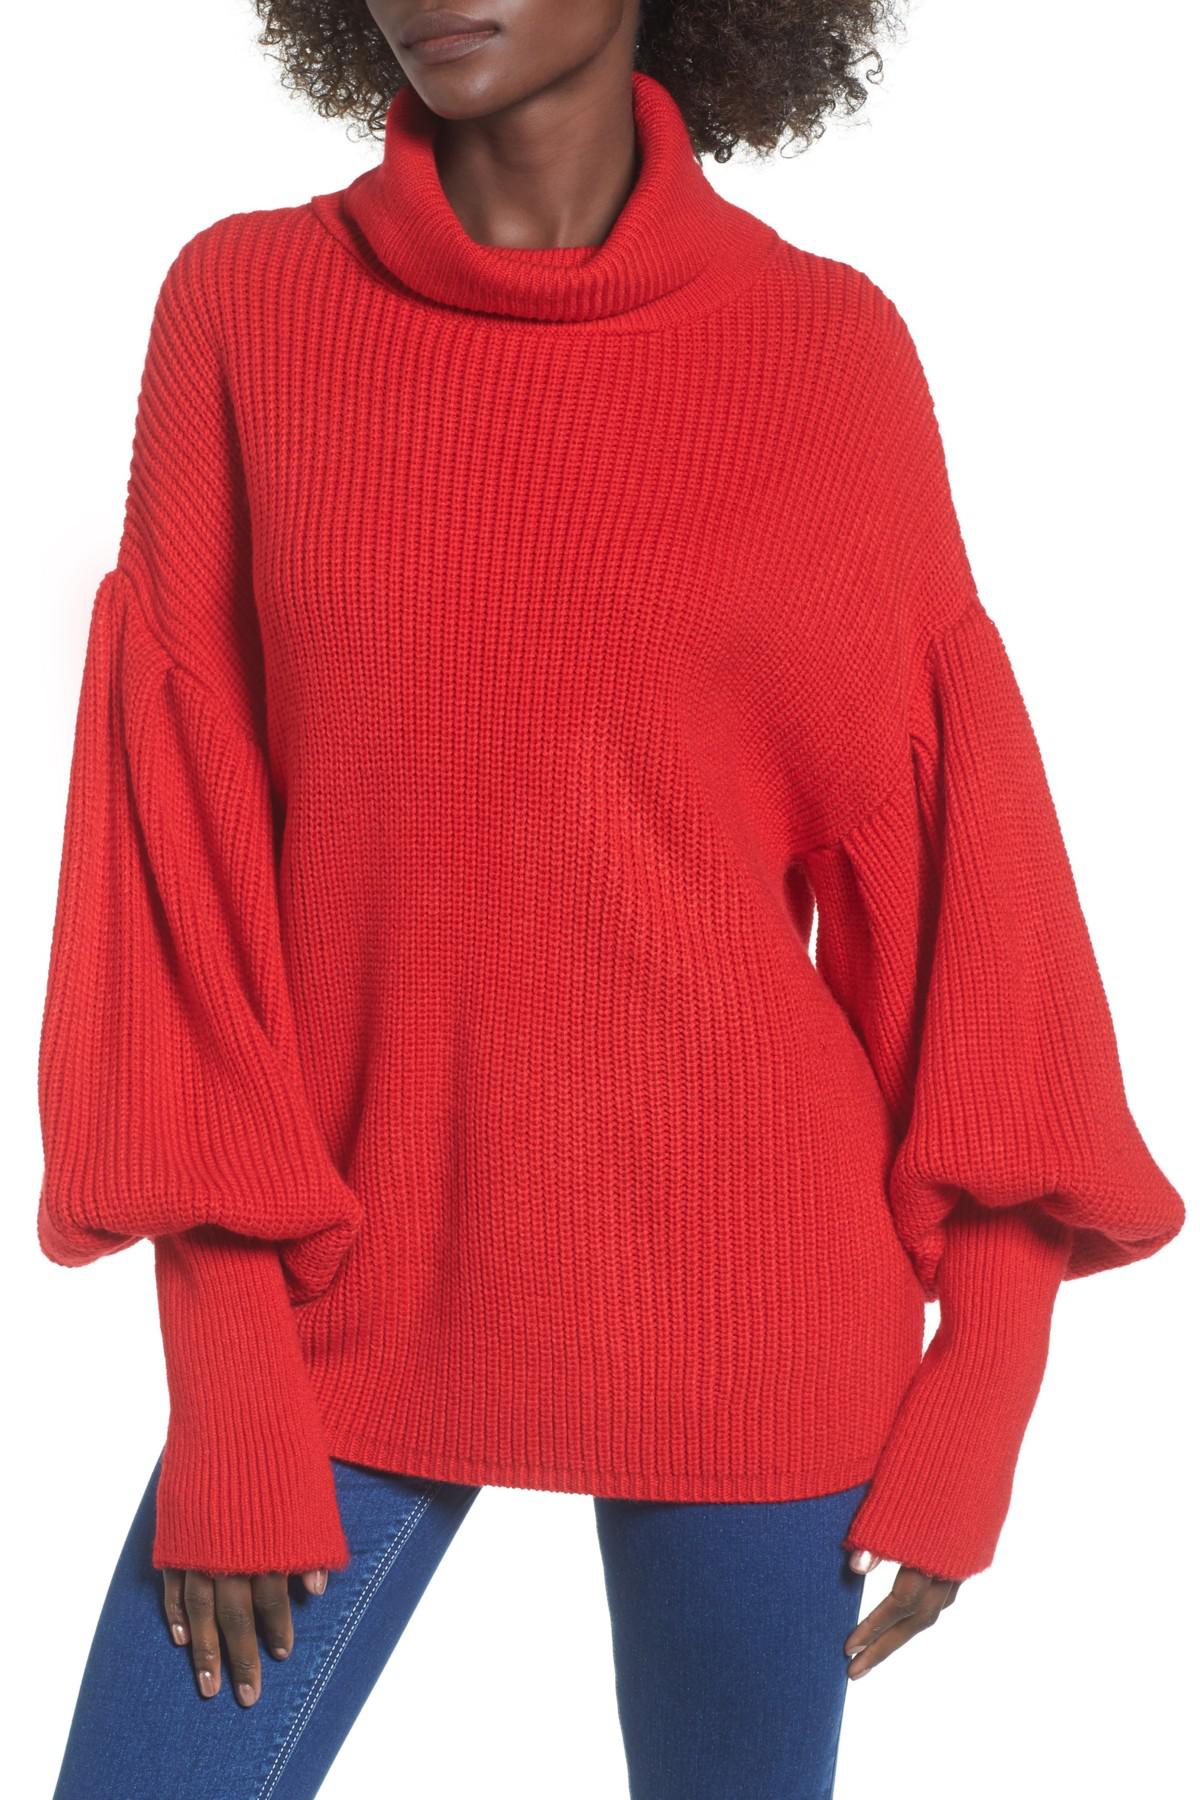 Turtleneck sweater dress topshop for women aliexpress king